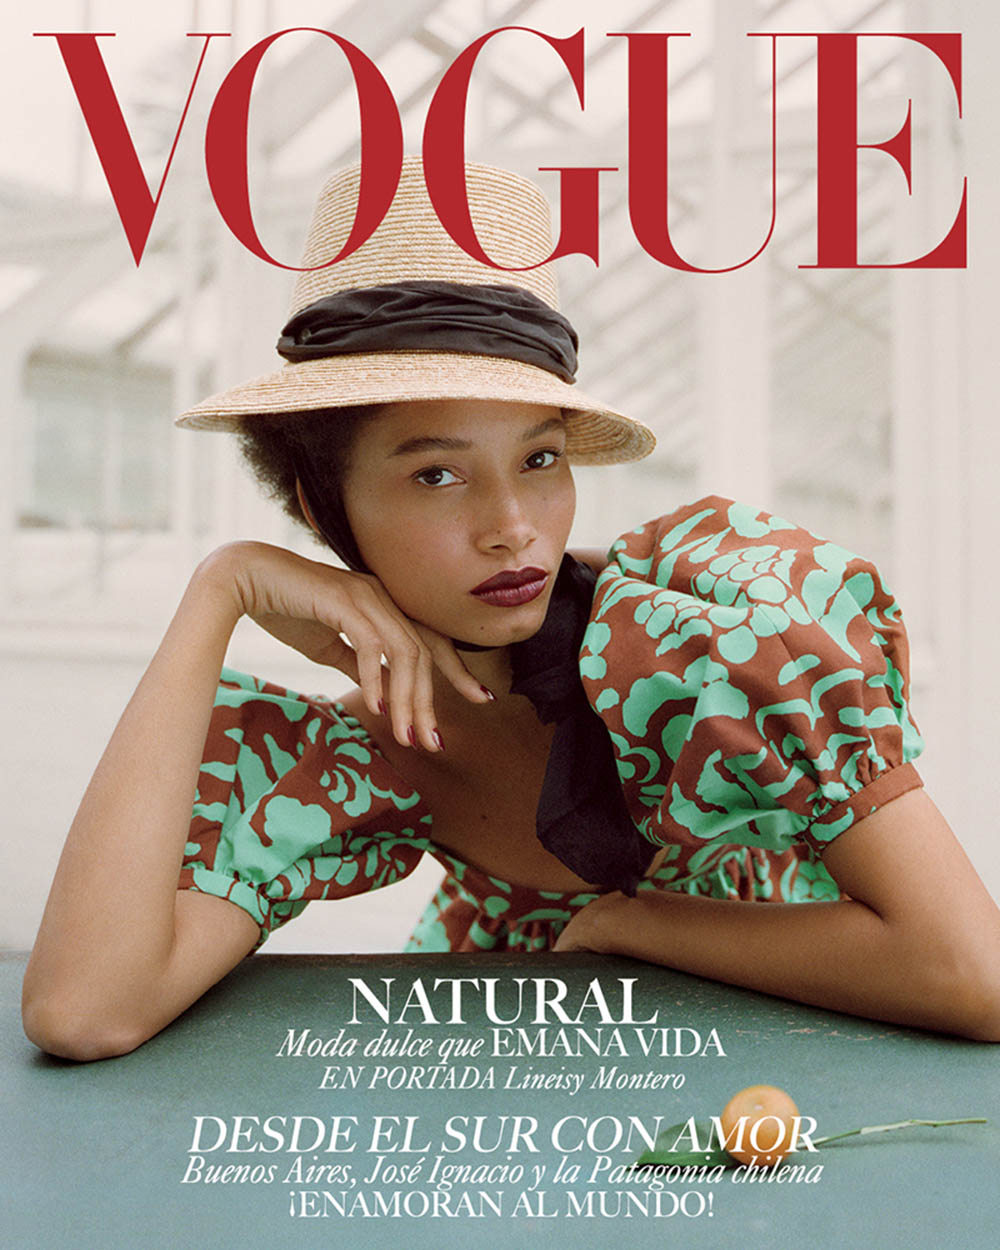 Lineisy Montero covers Vogue Latin America February 2019 by Stas Komarovski